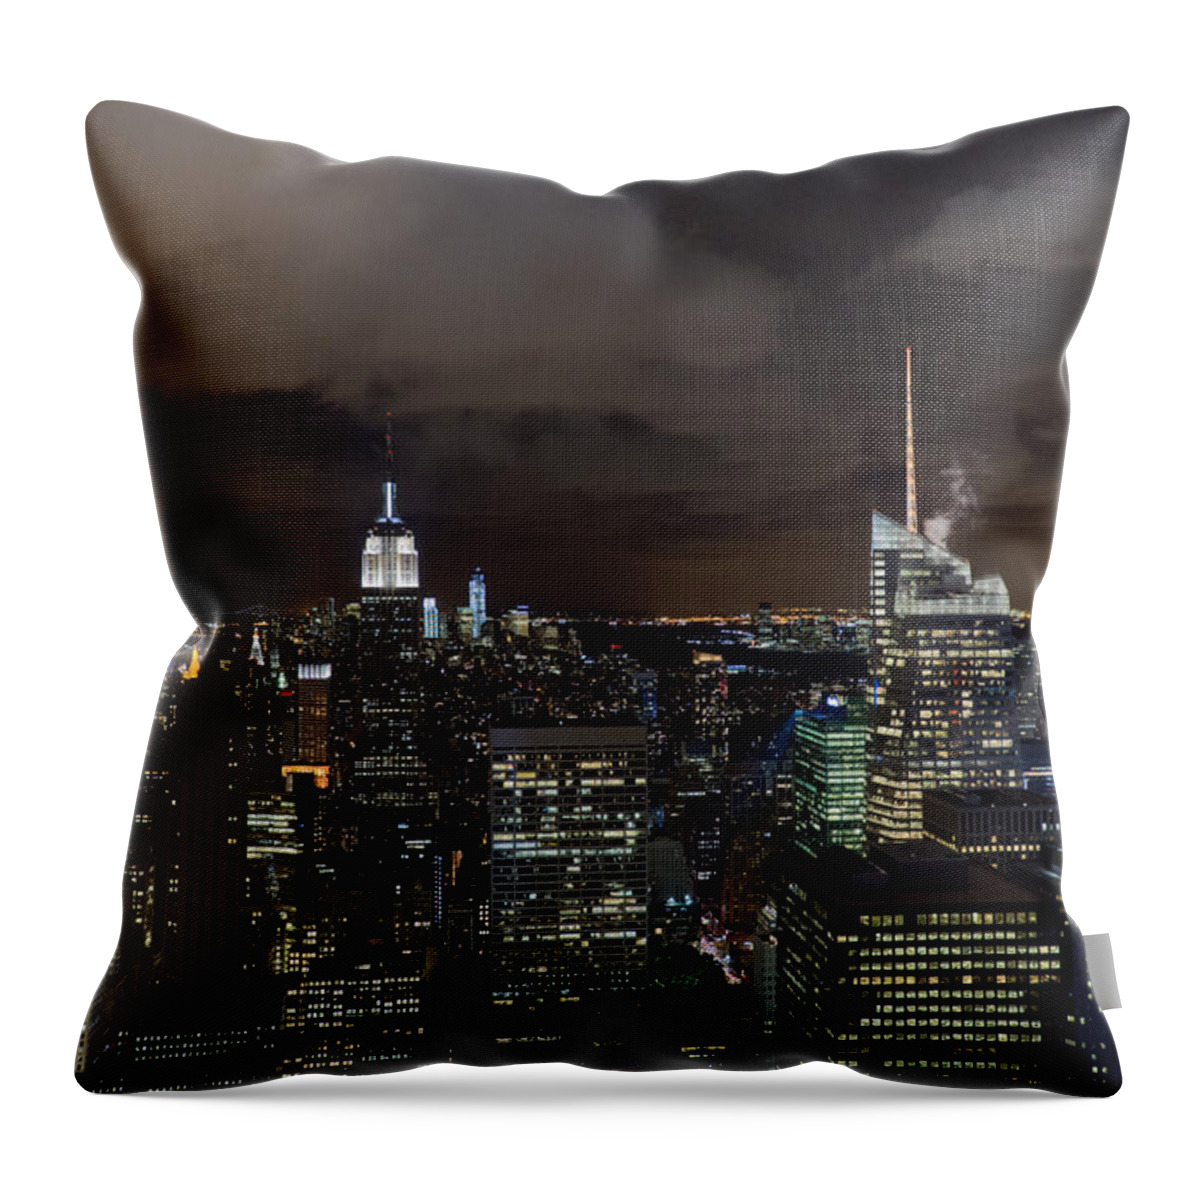 New York Skyline Throw Pillow featuring the photograph New York skyline at night by Gary Eason